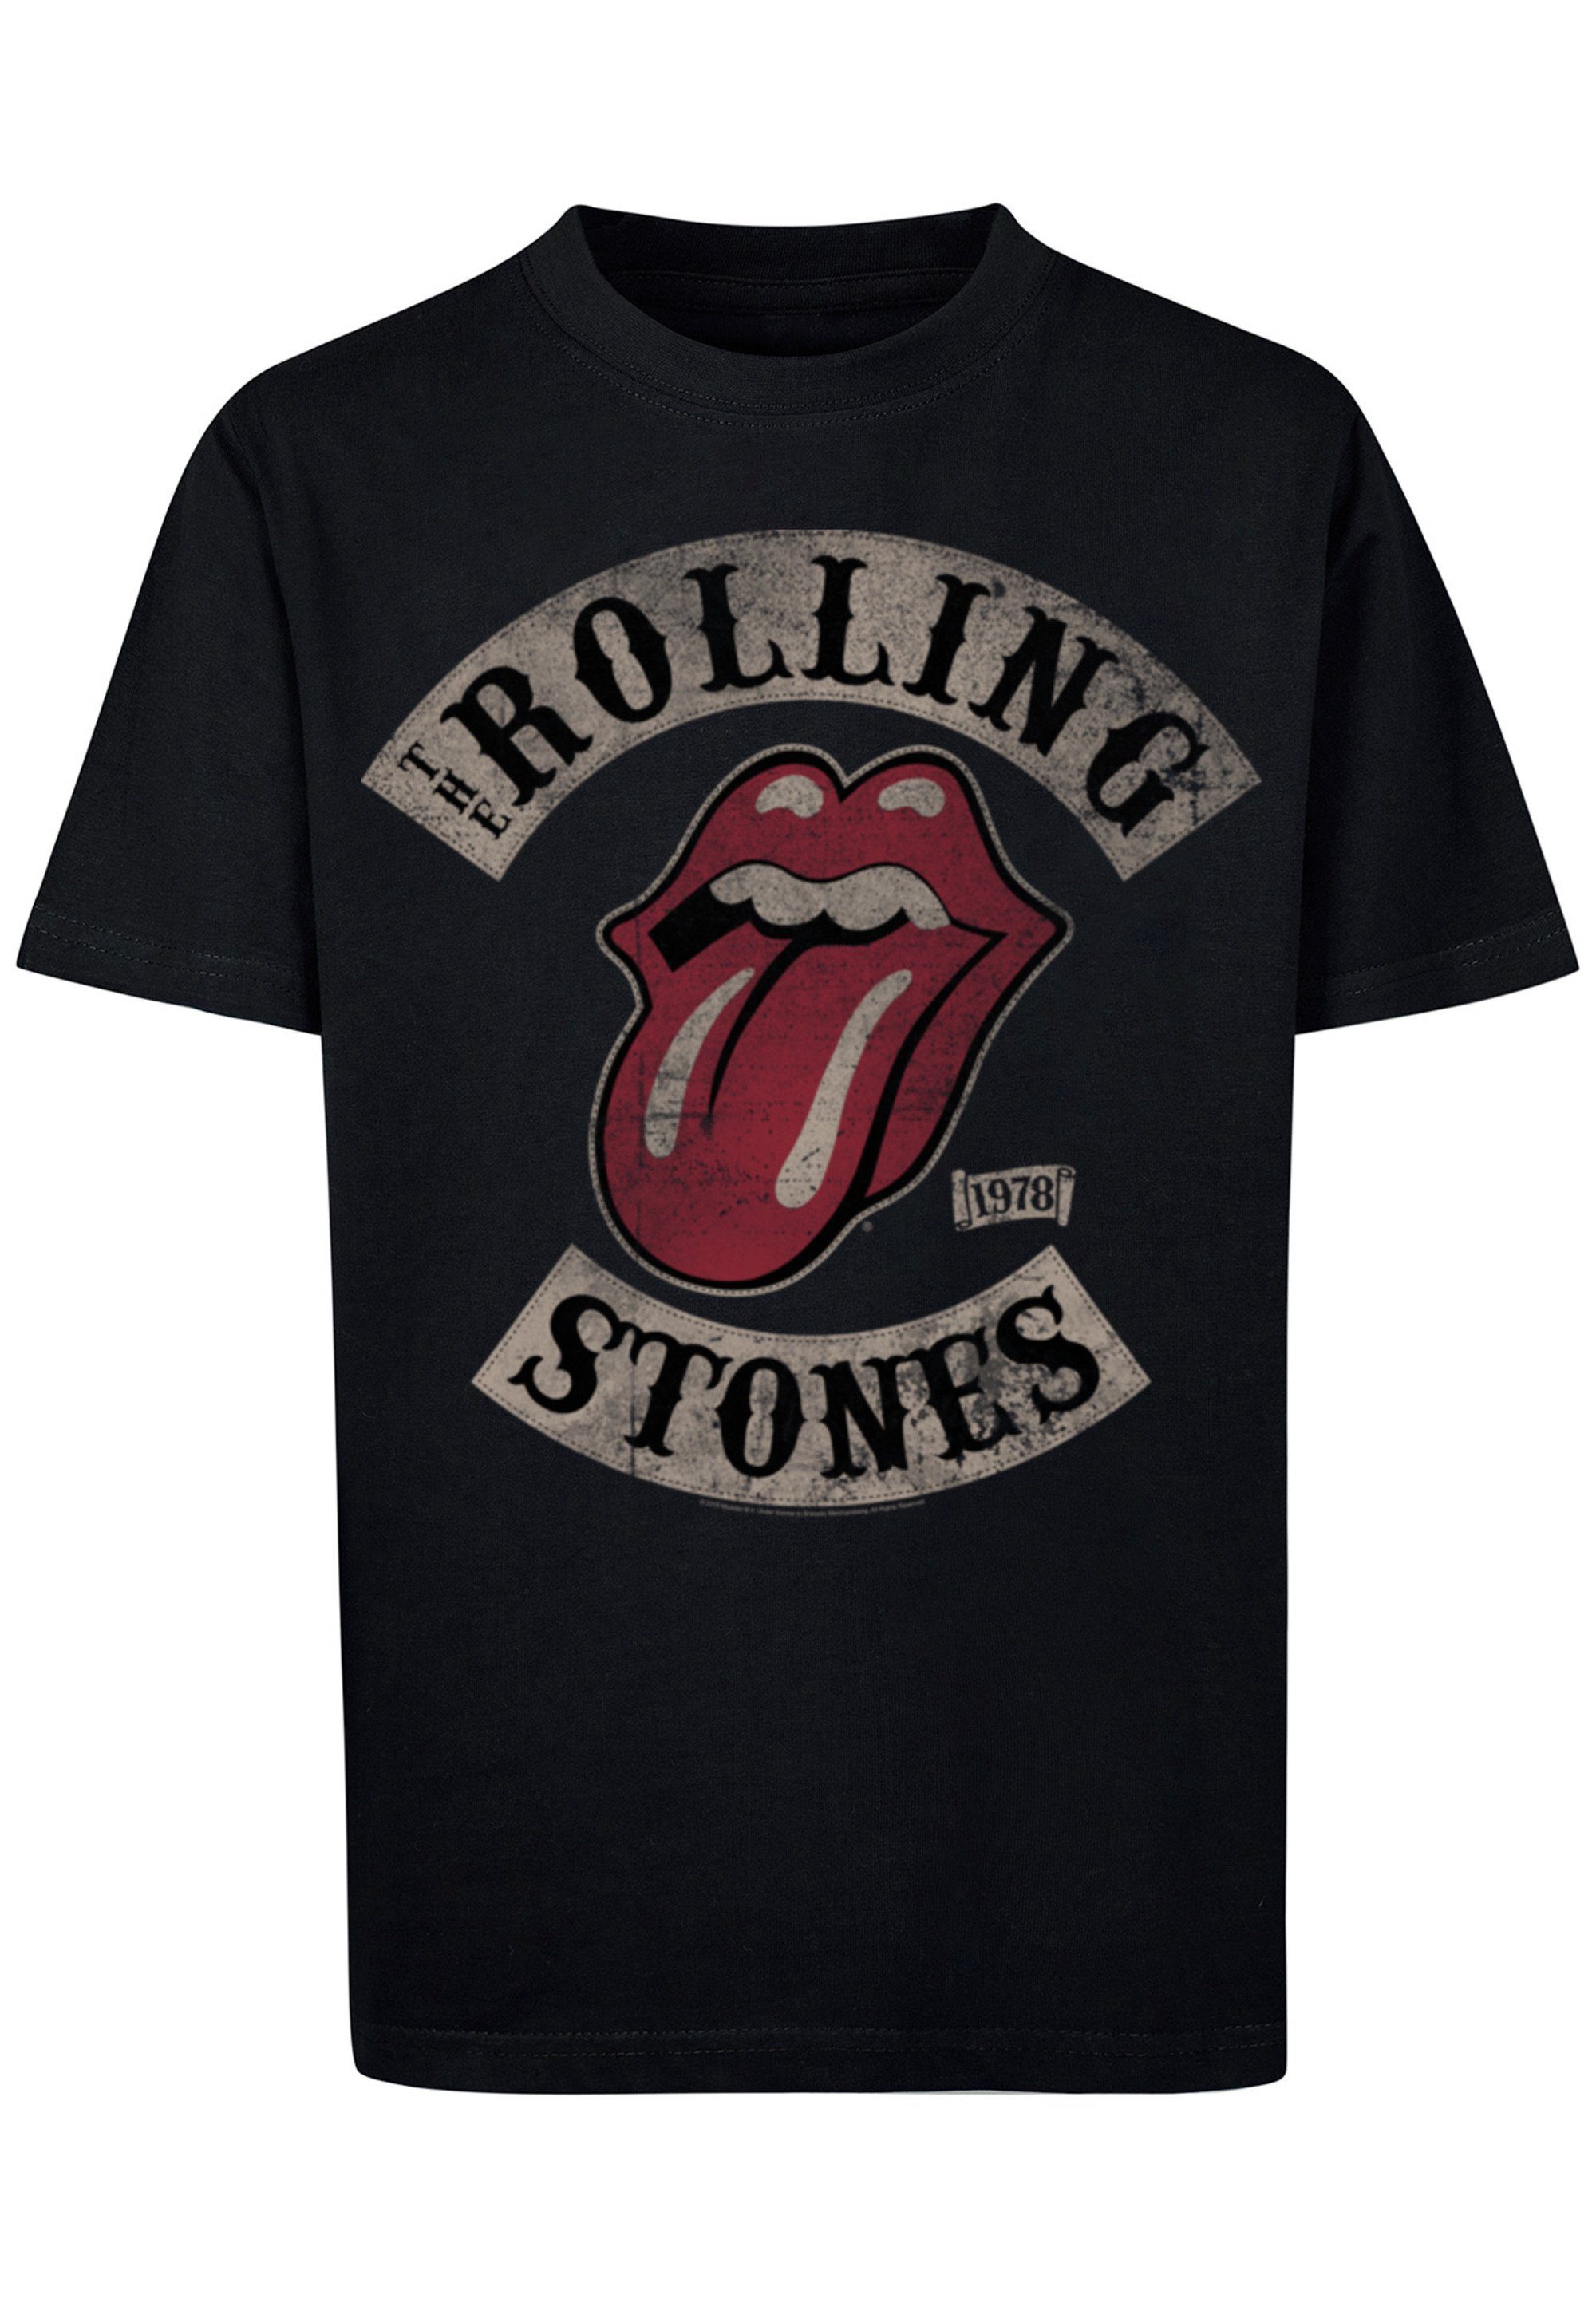 F4NT4STIC Print The Rolling Rockband Stones schwarz Tour T-Shirt Black '78